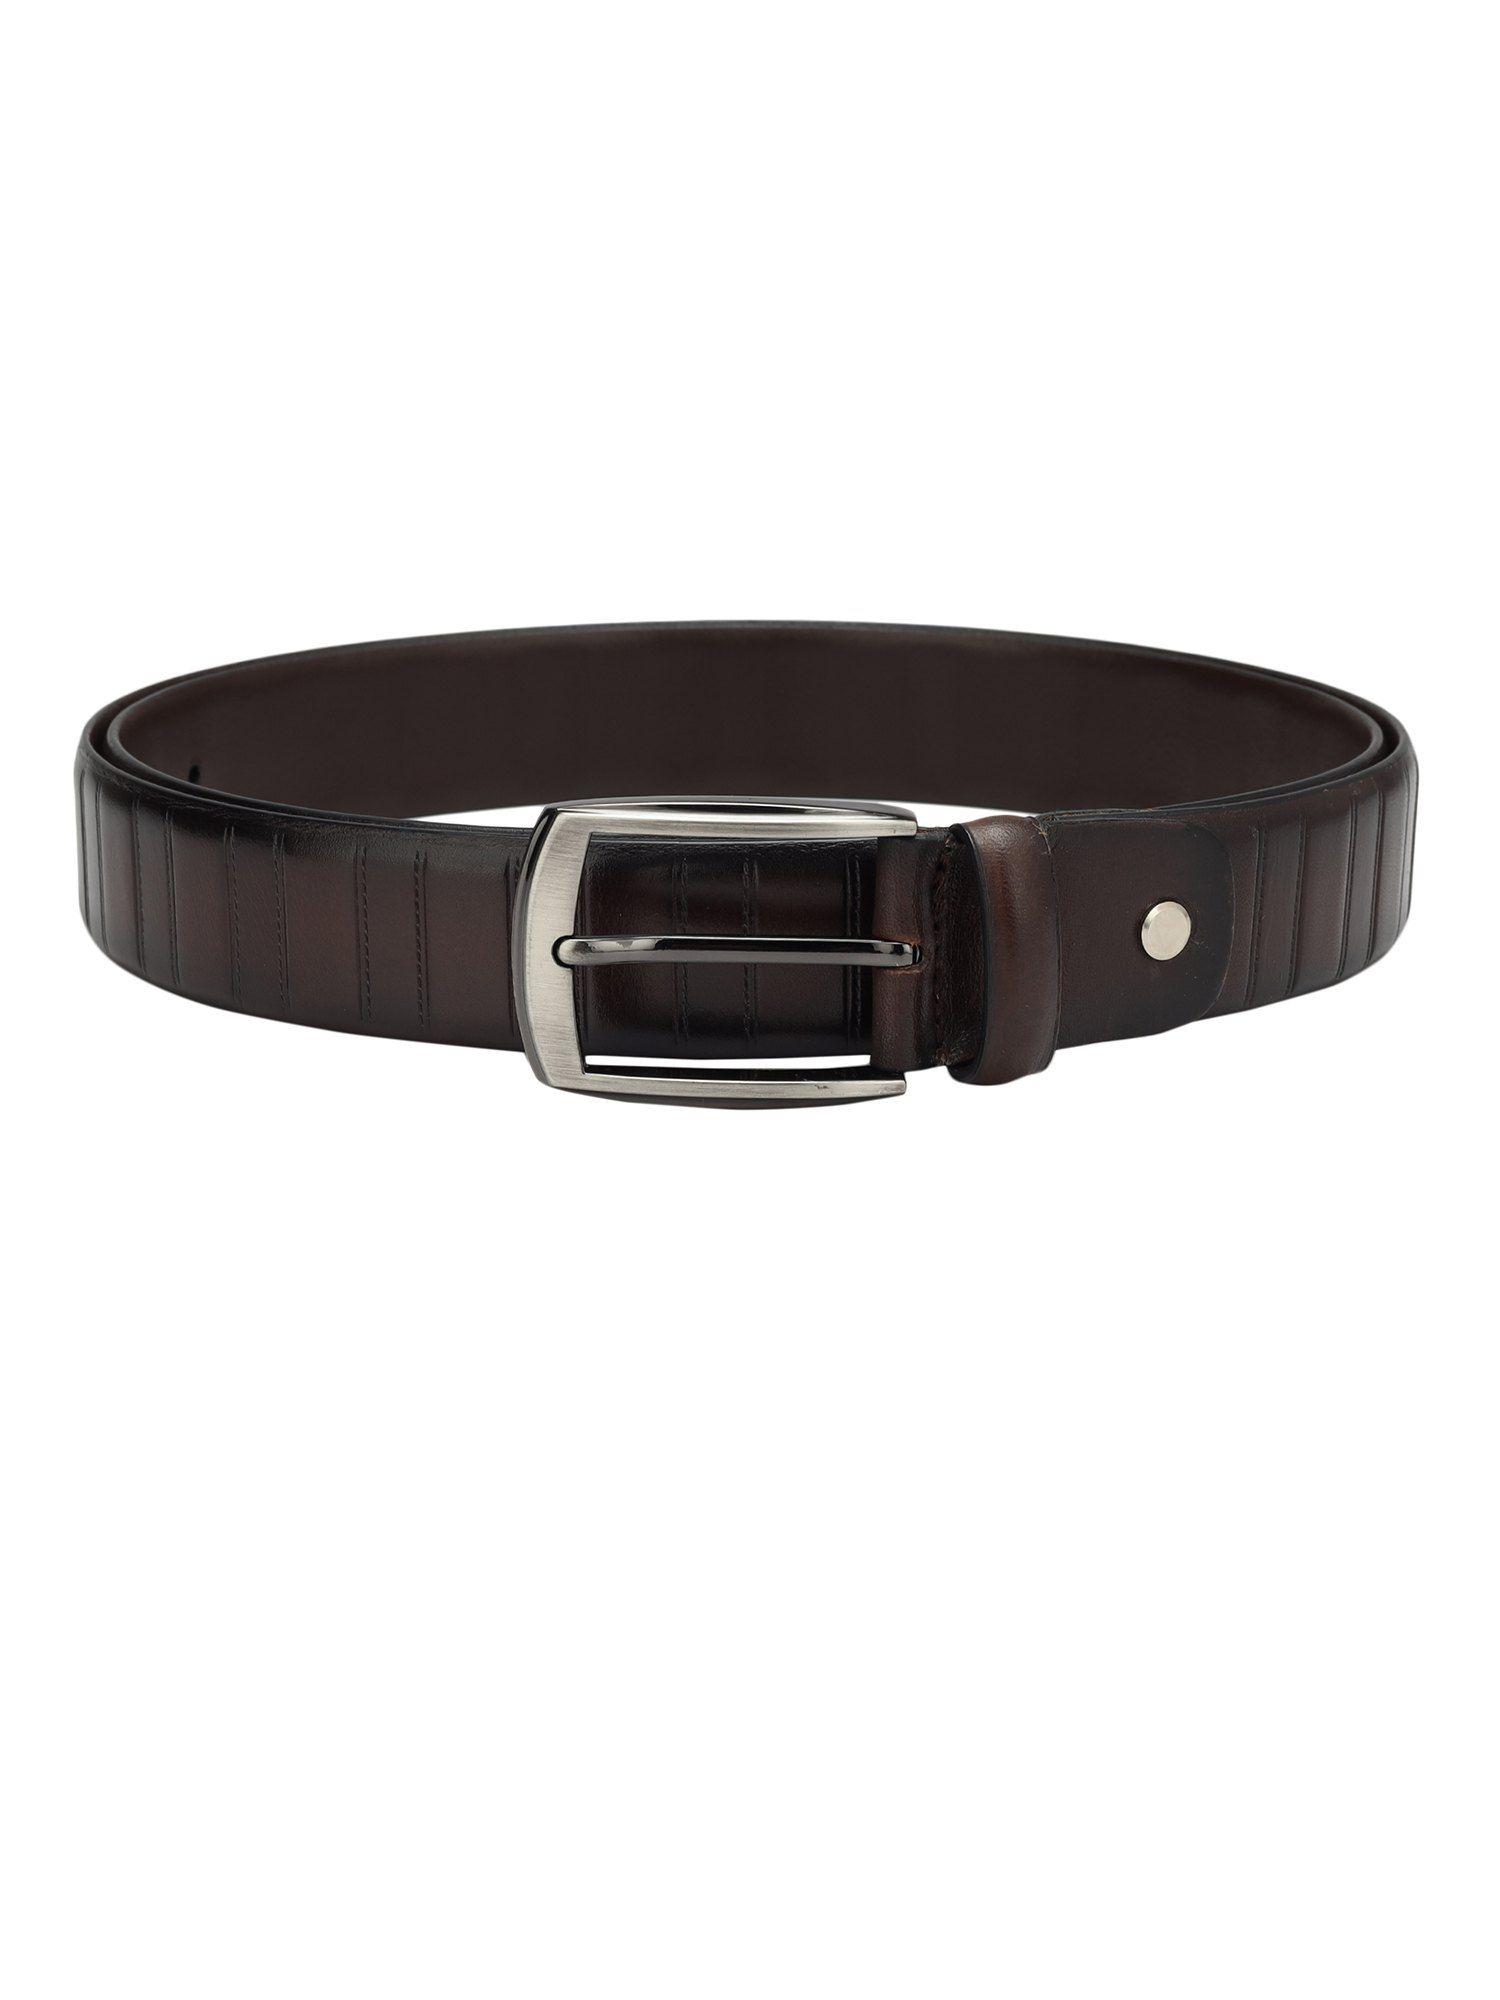 genuine leather brown men's belt